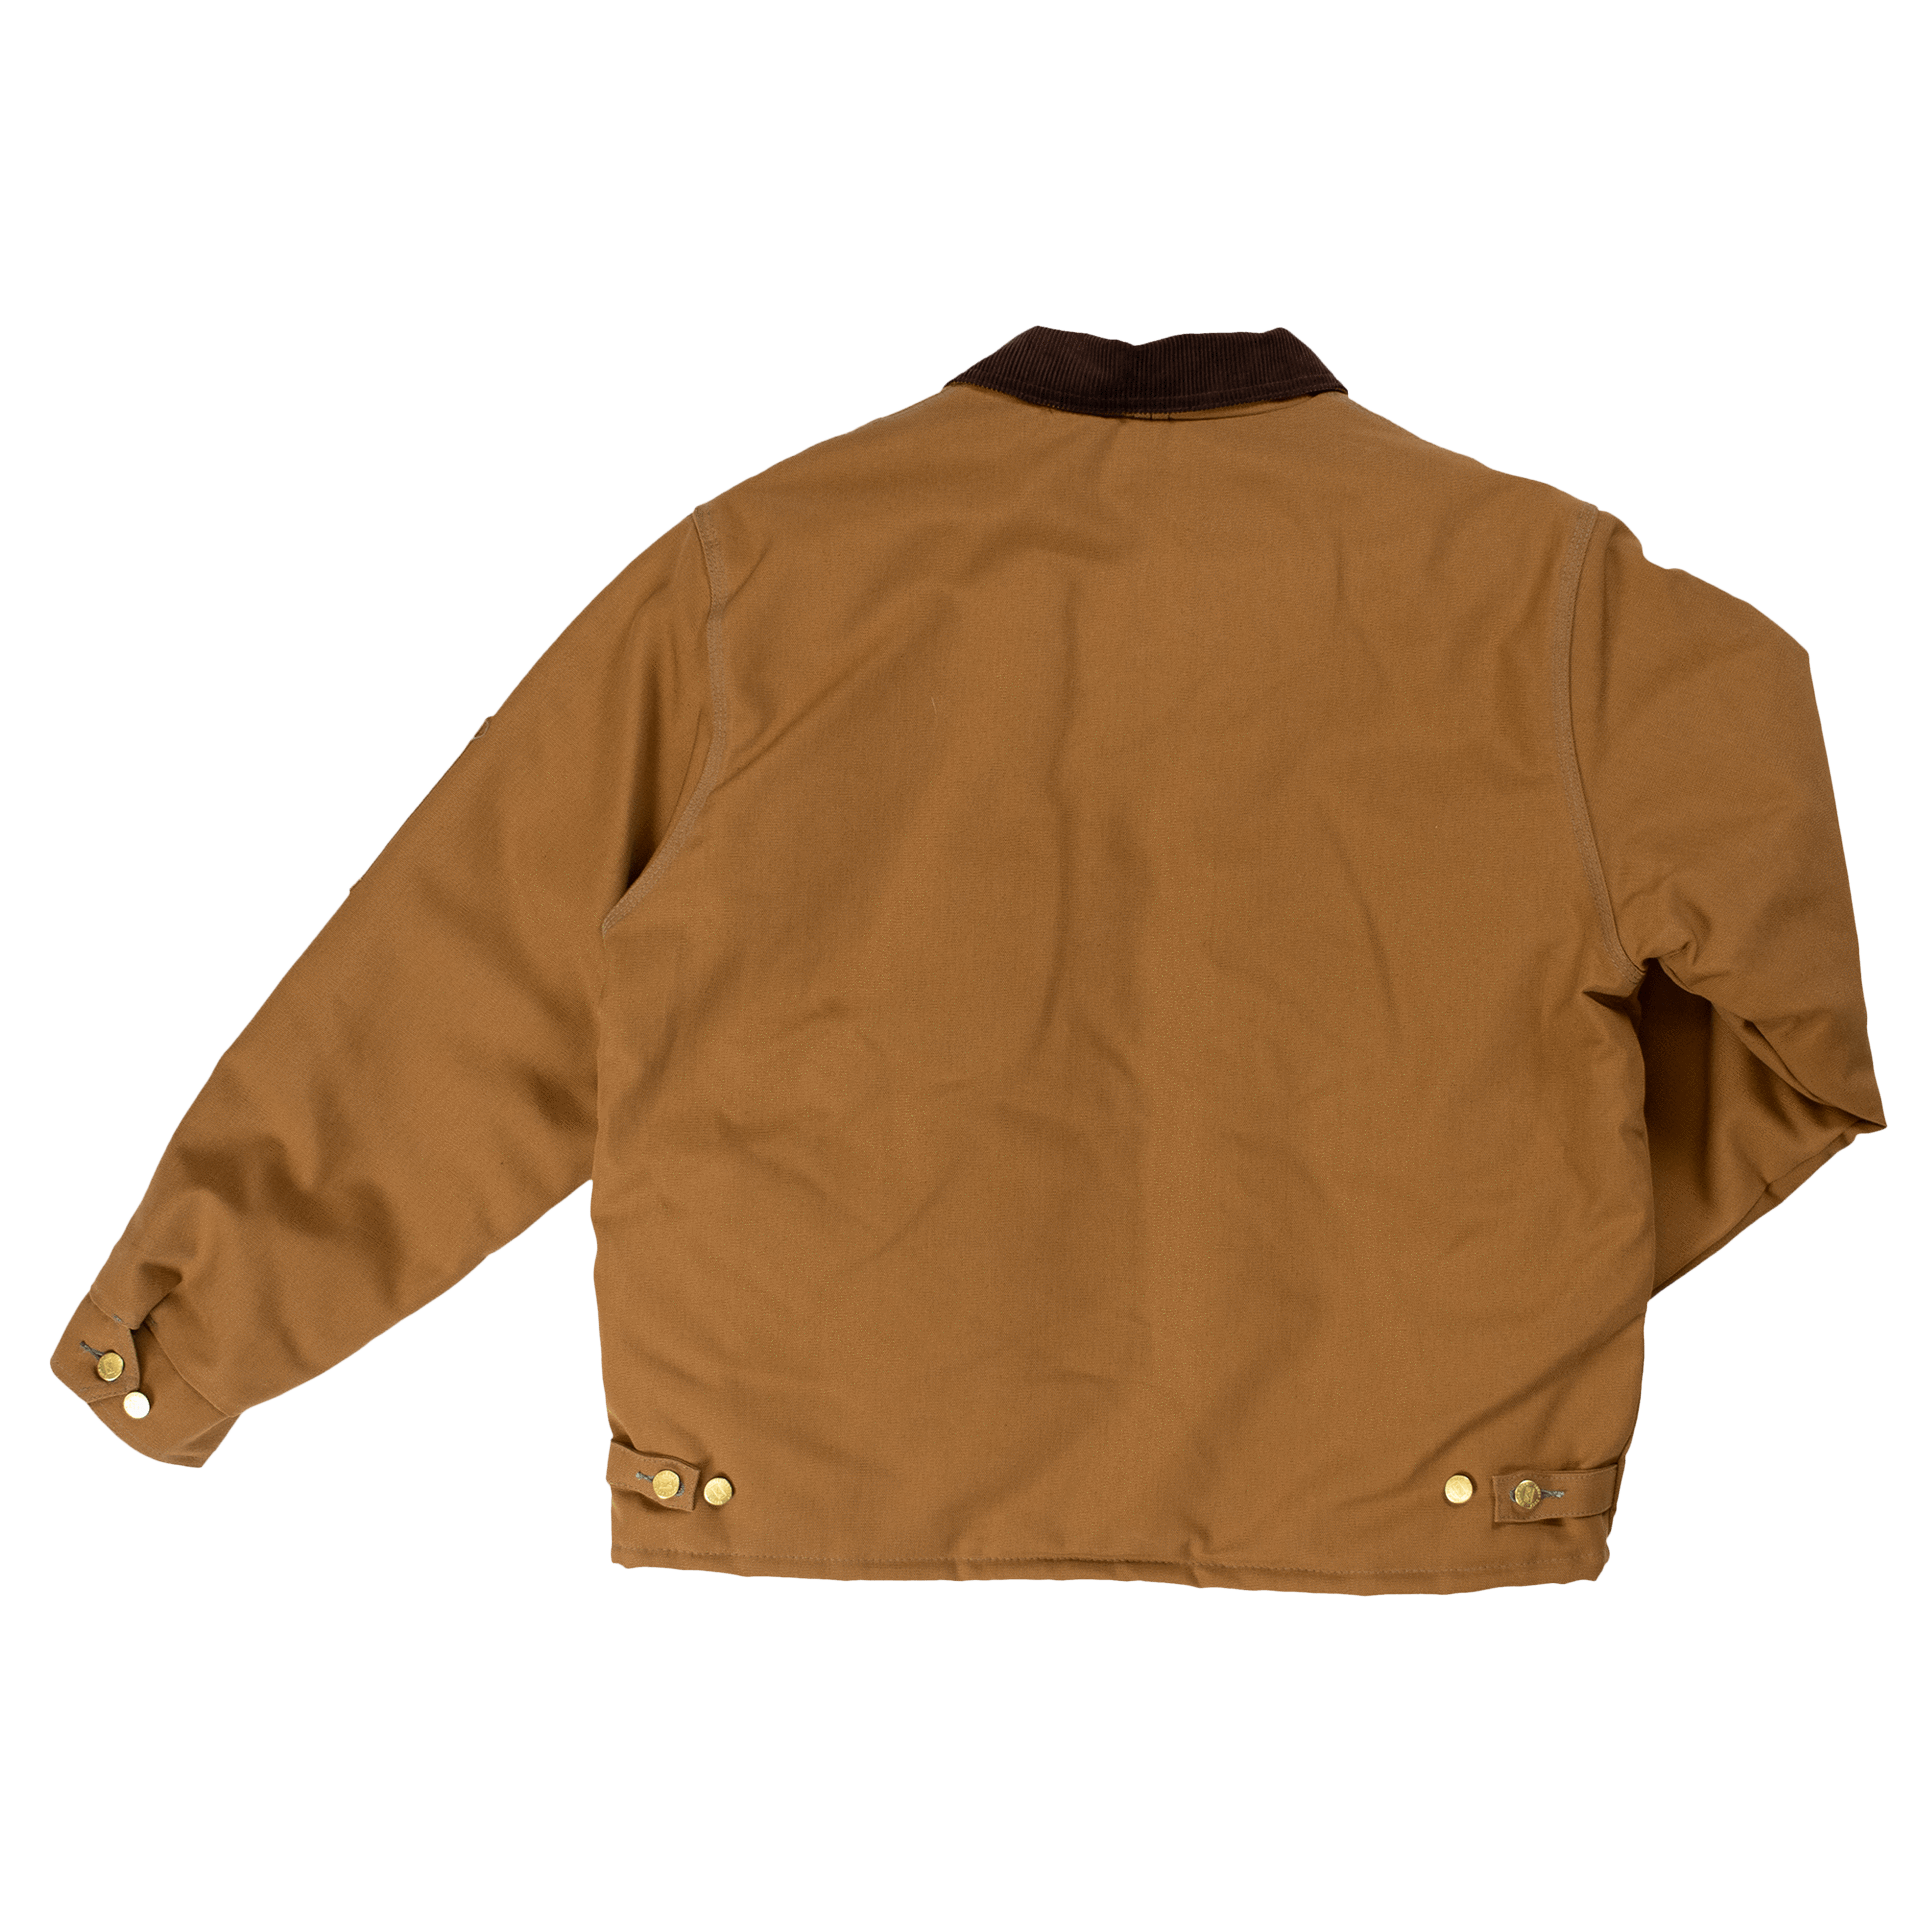 Tough Duck Chore Coat - 2137 - Brown - back